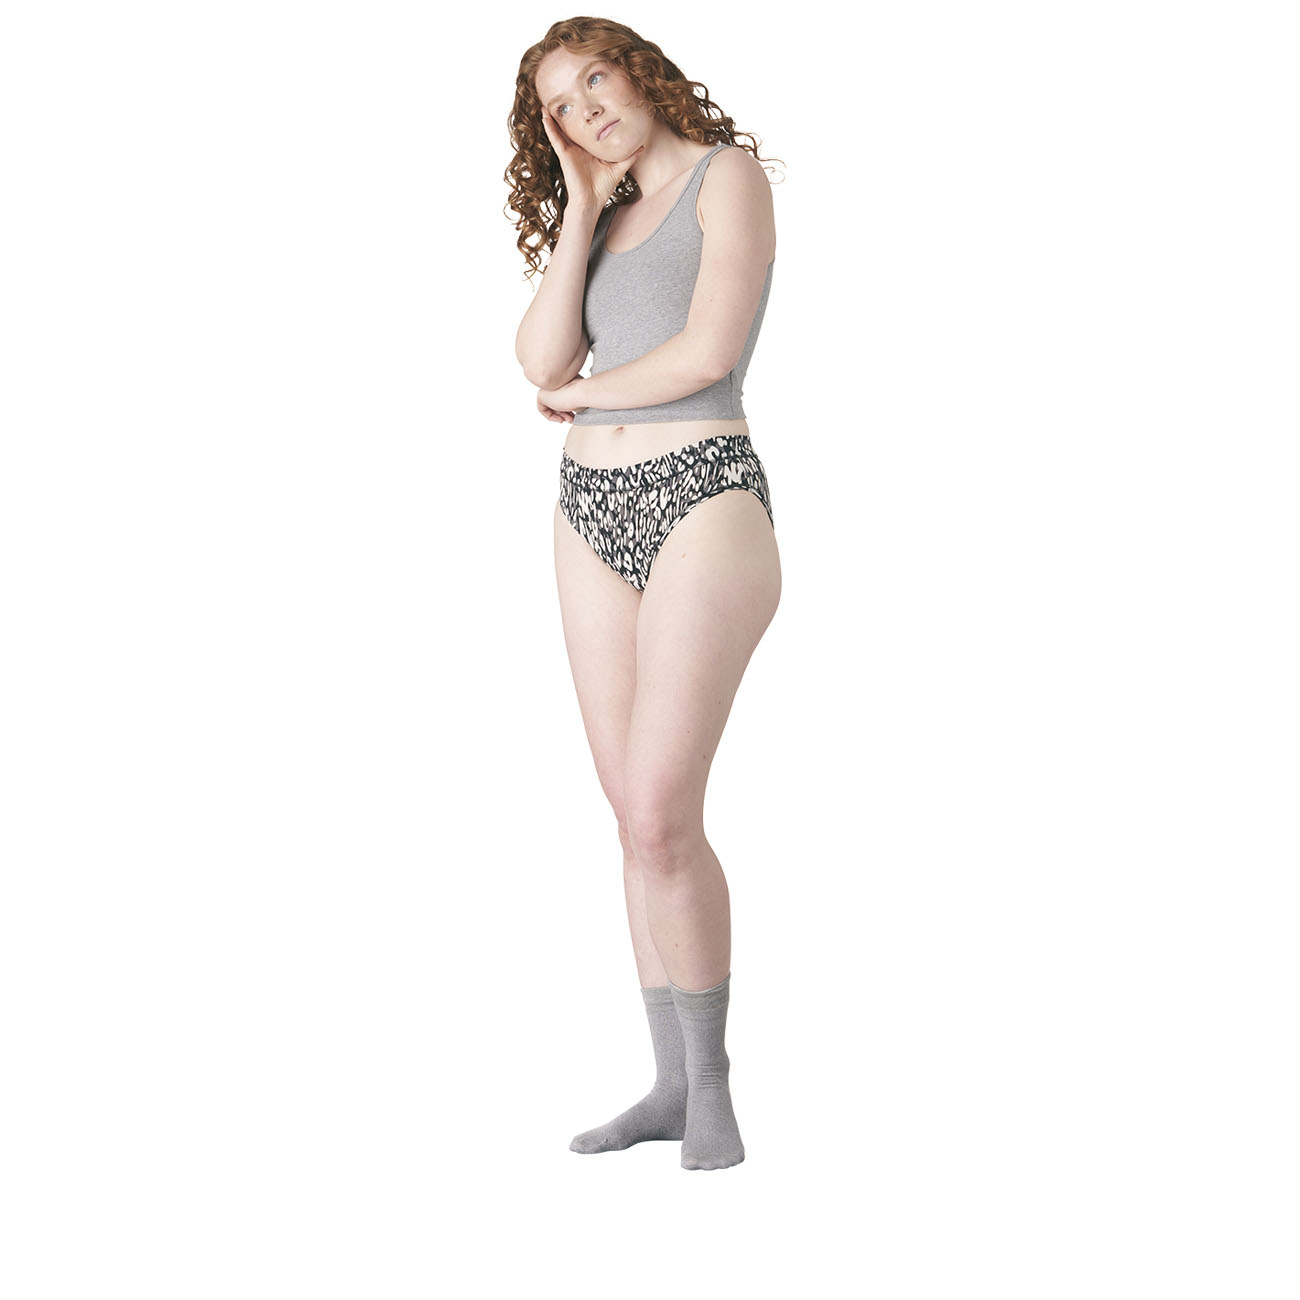 Women's Thinx Period-Absorbing Super Bikini Panty TB0002